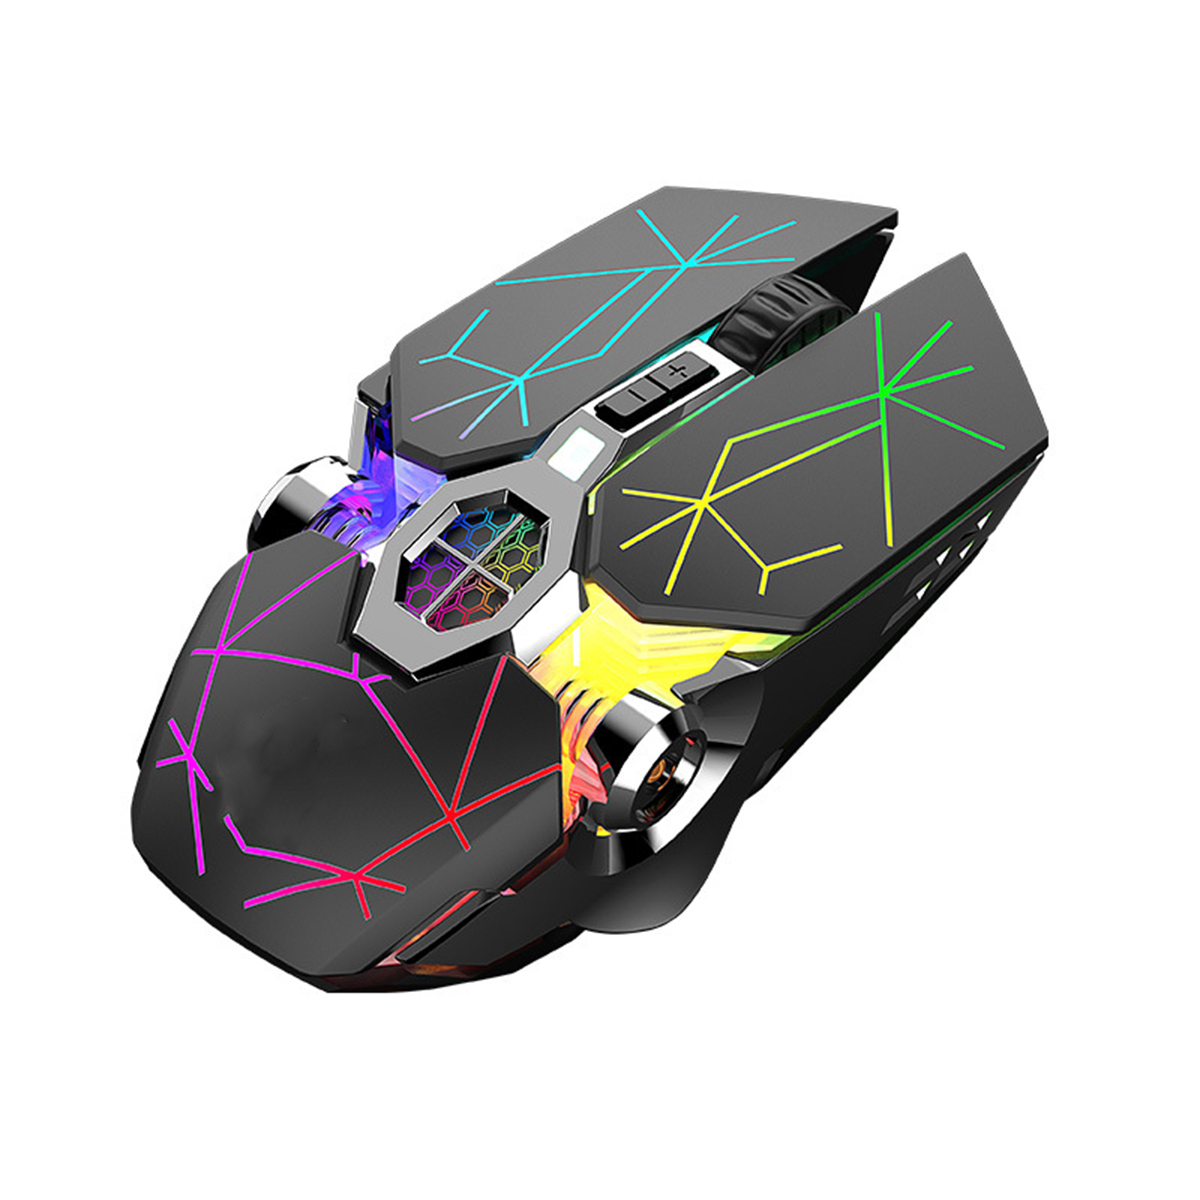 Maus wassergekühlte schwarz SYNTEK Wireless Mouse Gaming Maus Rechargeable mechanische Maus, beleuchtete Stille